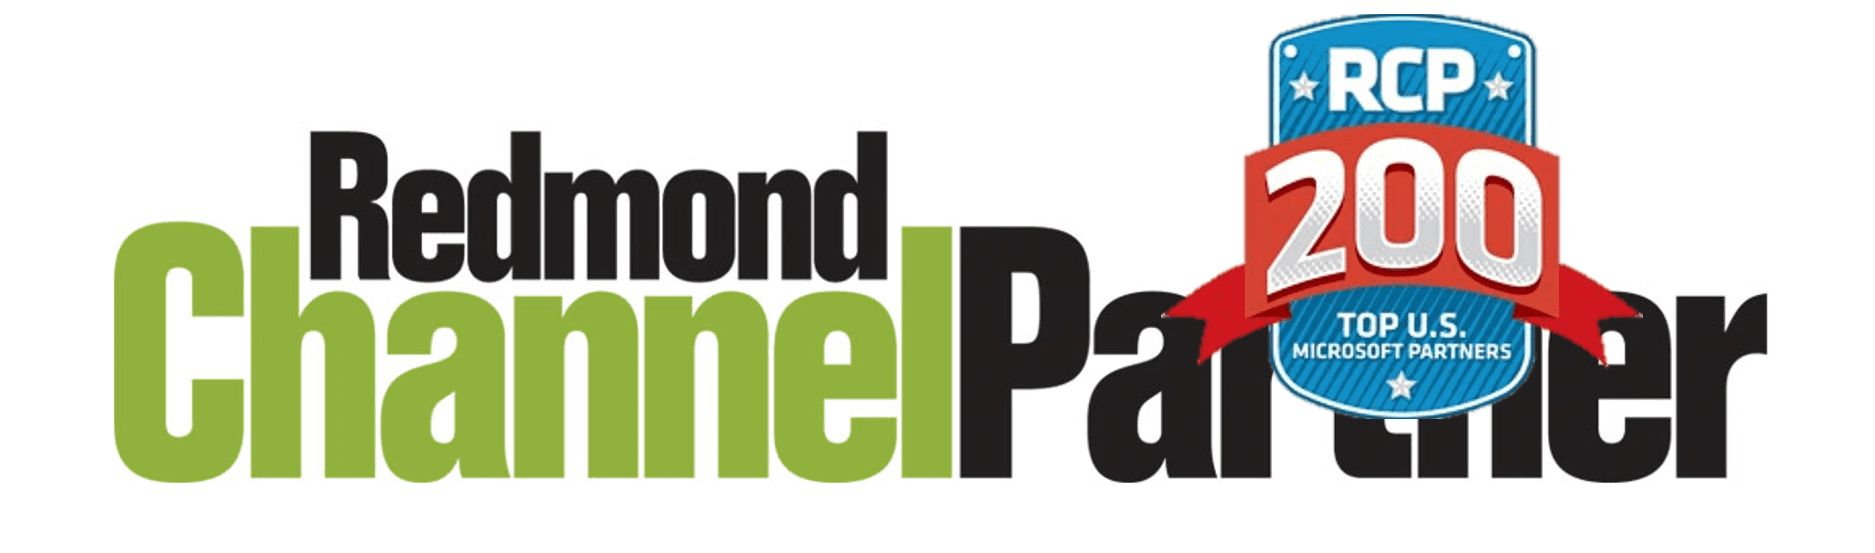 redmond channel Partner logo